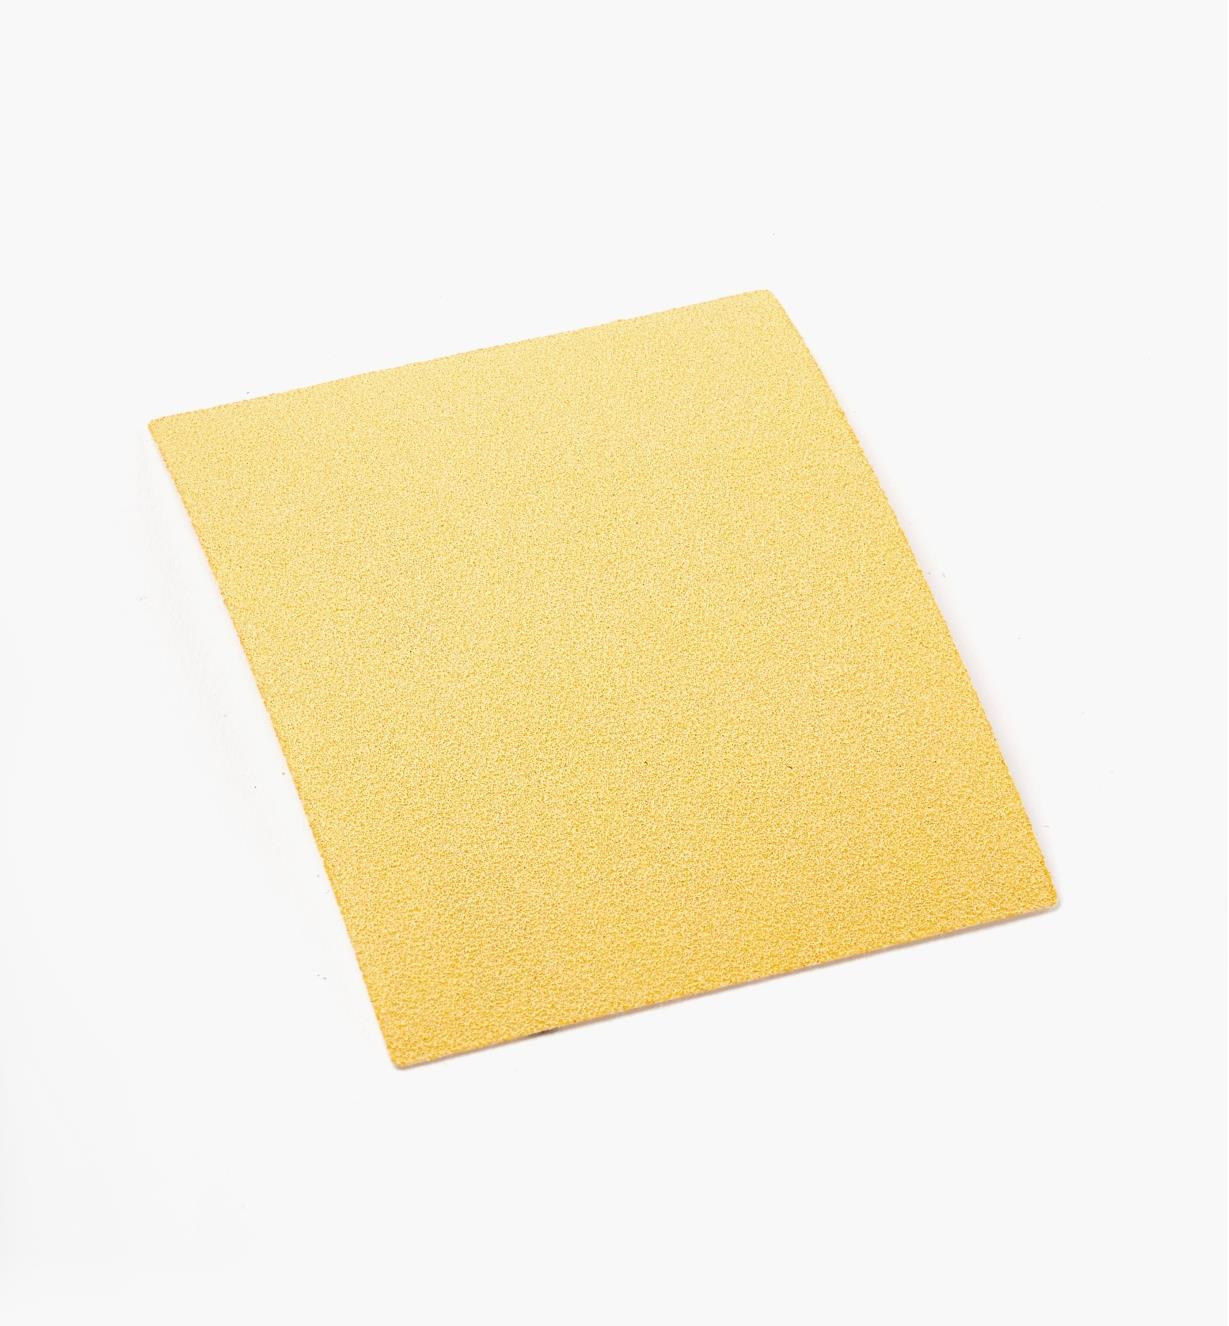 08K3454 - 150x Mirka Gold Grip Sheet, 3" × 4", ea.